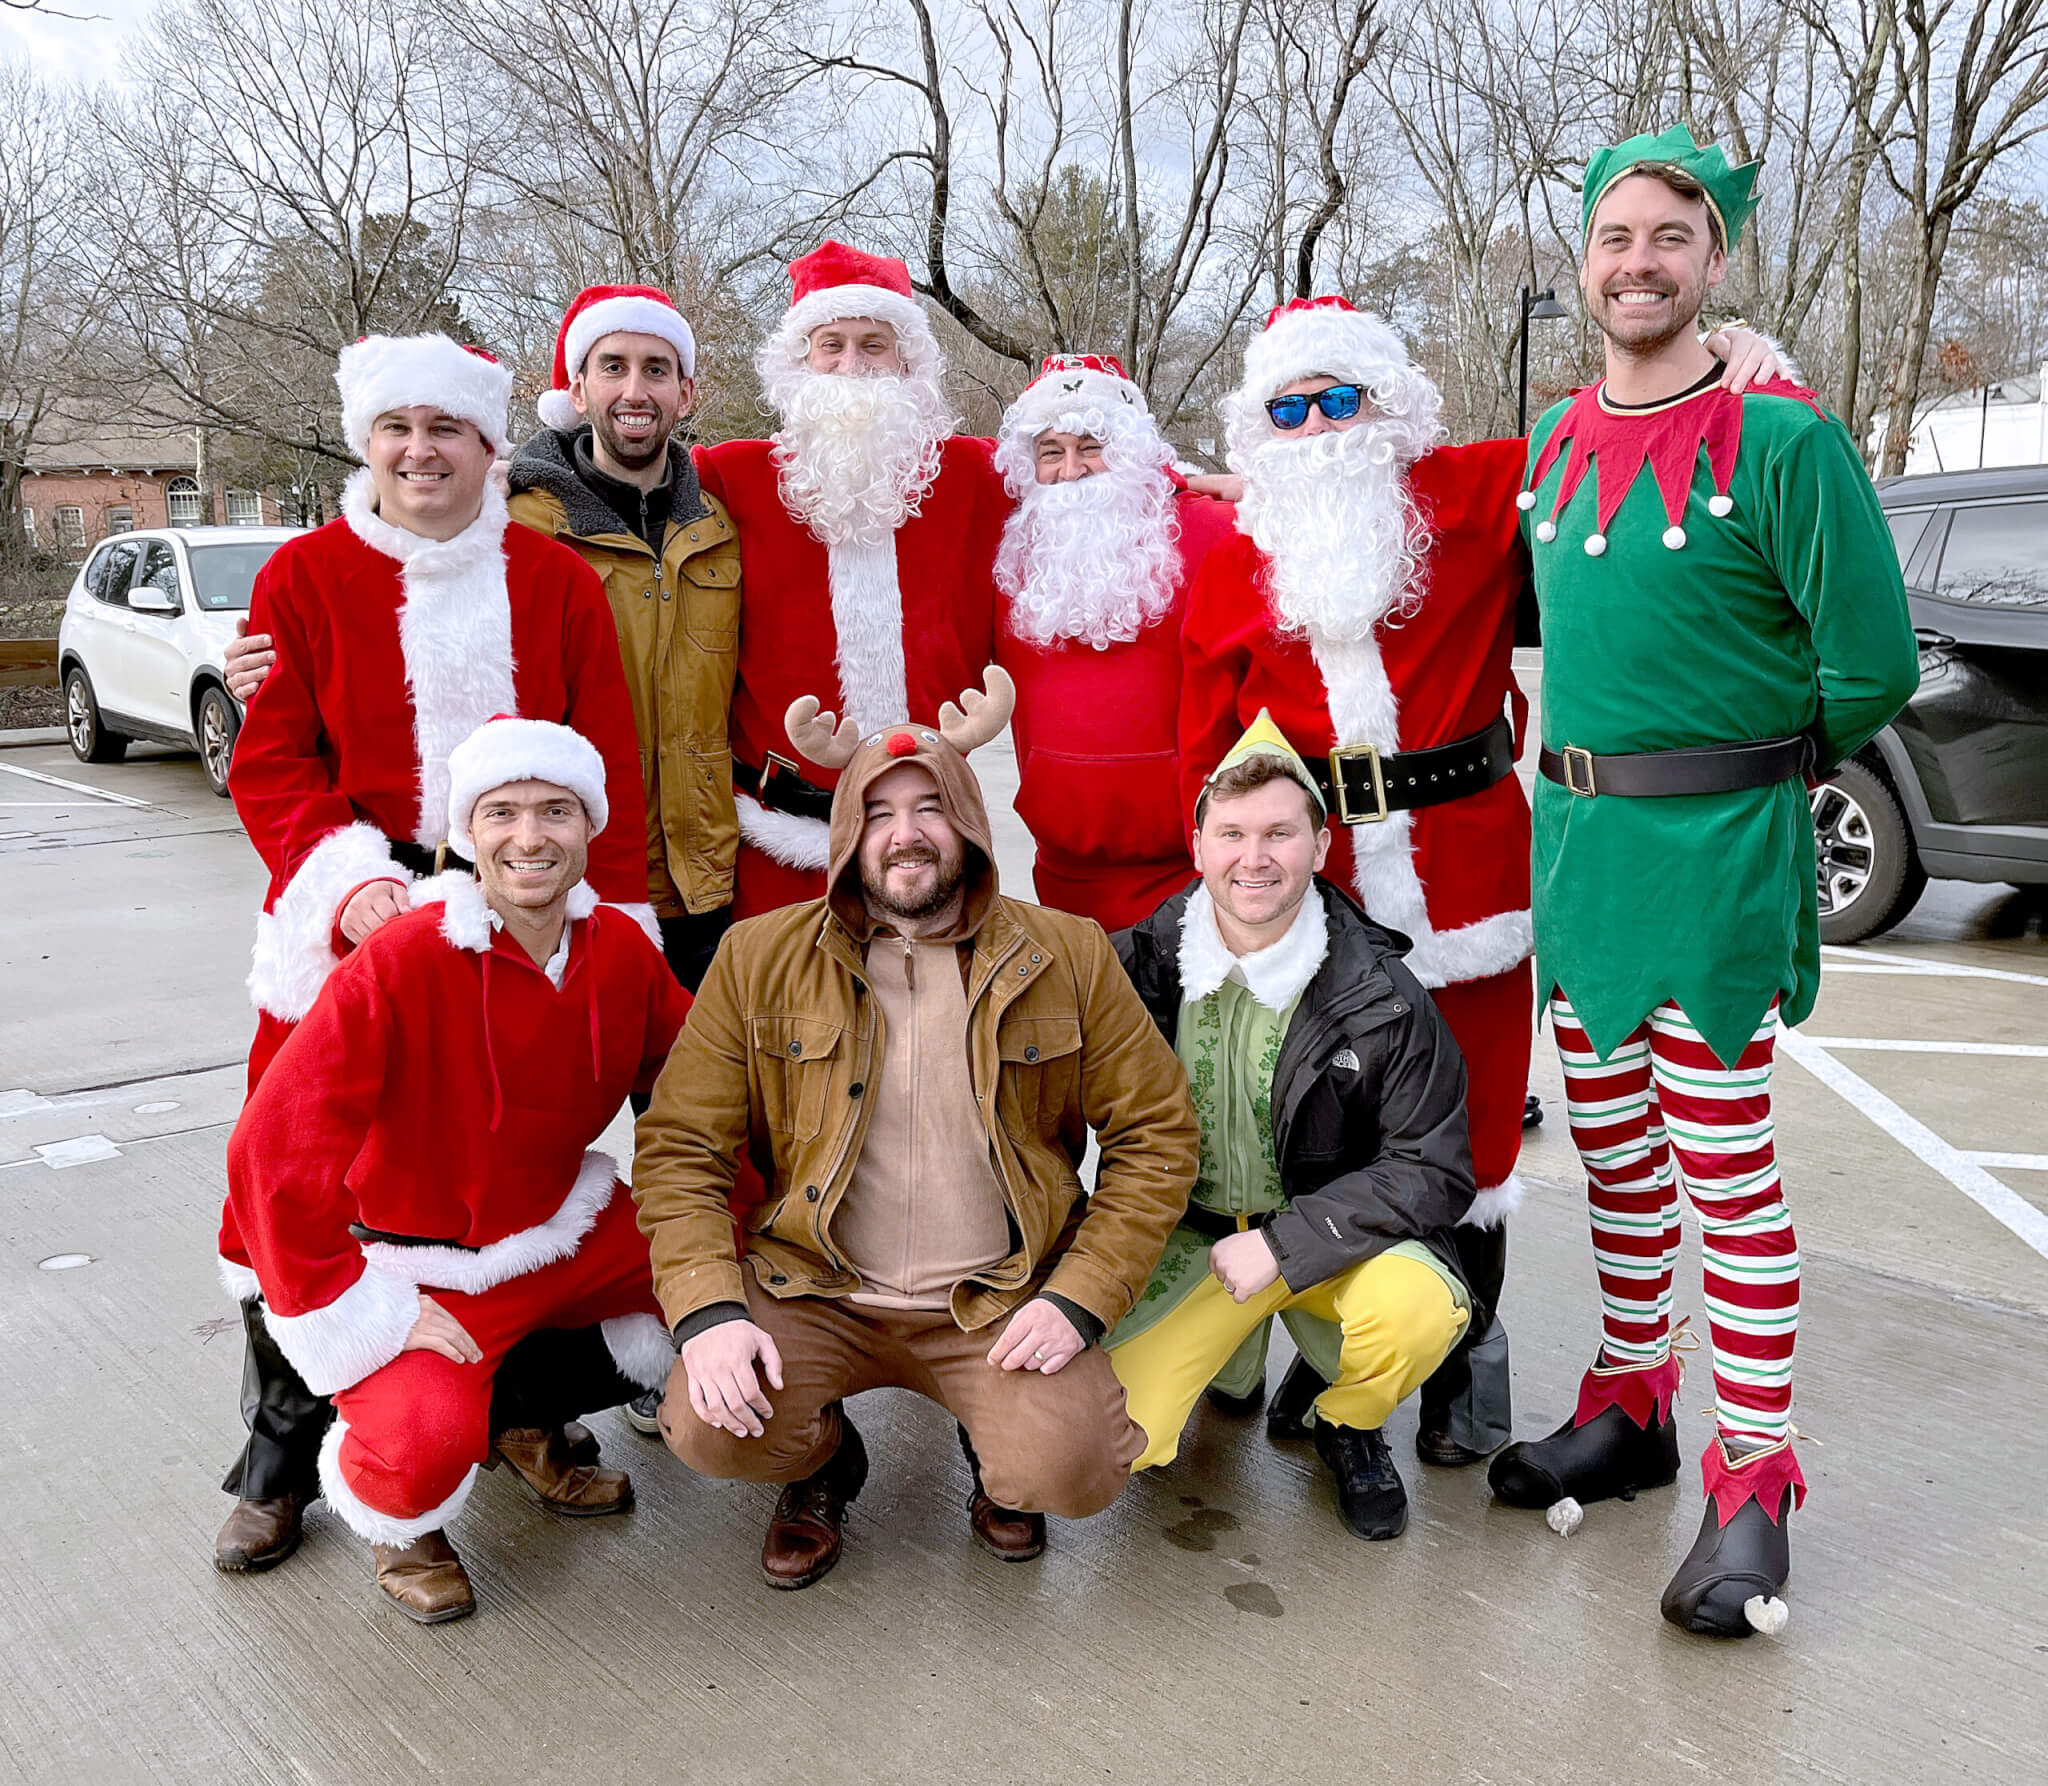 Top Left: John Palusci, Marco Beltran, Mike Julian, Dan Healy, Charles O'Malley, and the Elf is Brian Burkhard. Bottom Left: Ross Collins, James Hogan (reindeer) and Patrick Cooper.